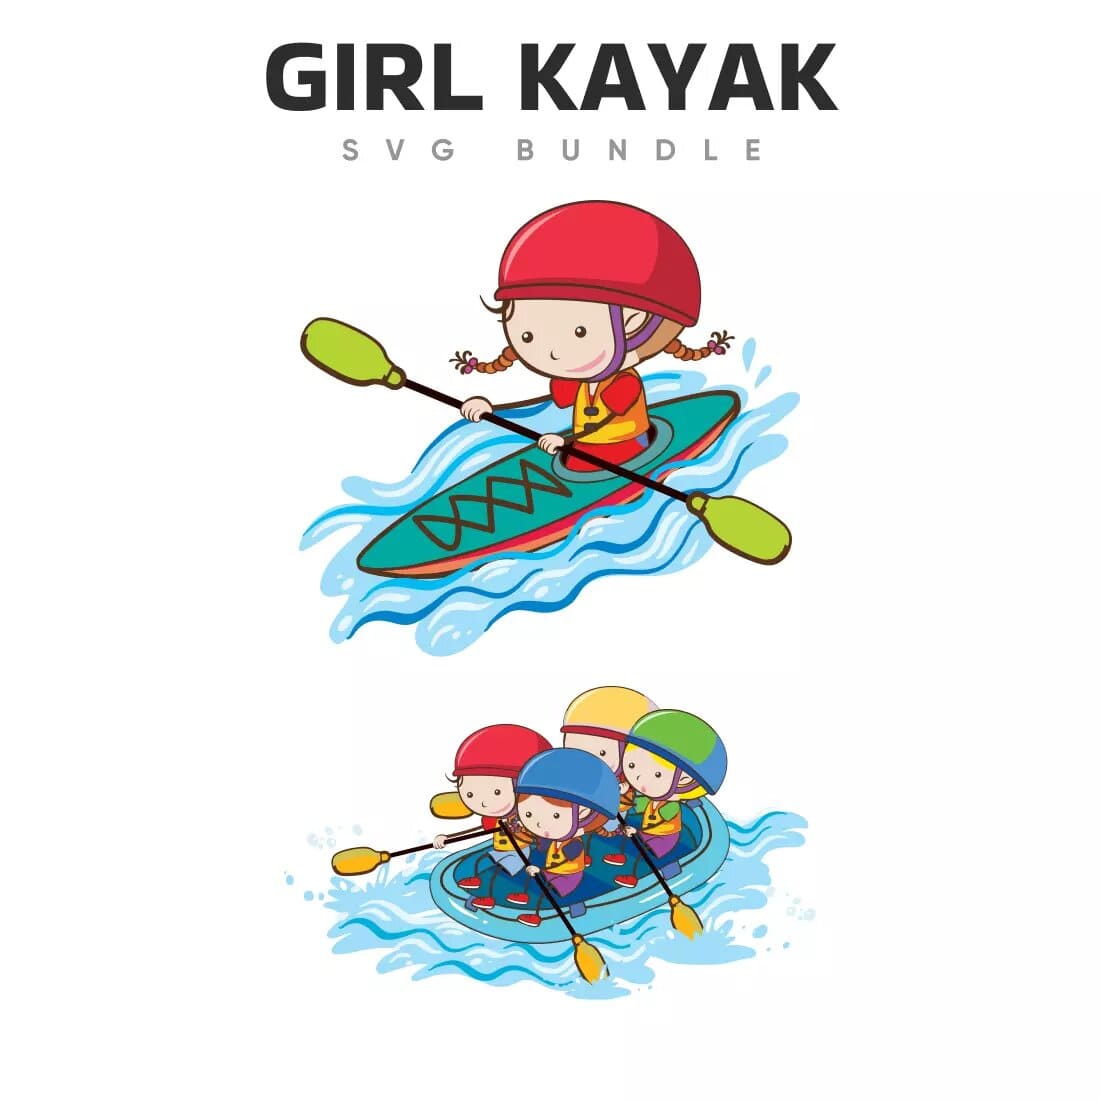 Girl Kayak SVG Bundle Preview 1.